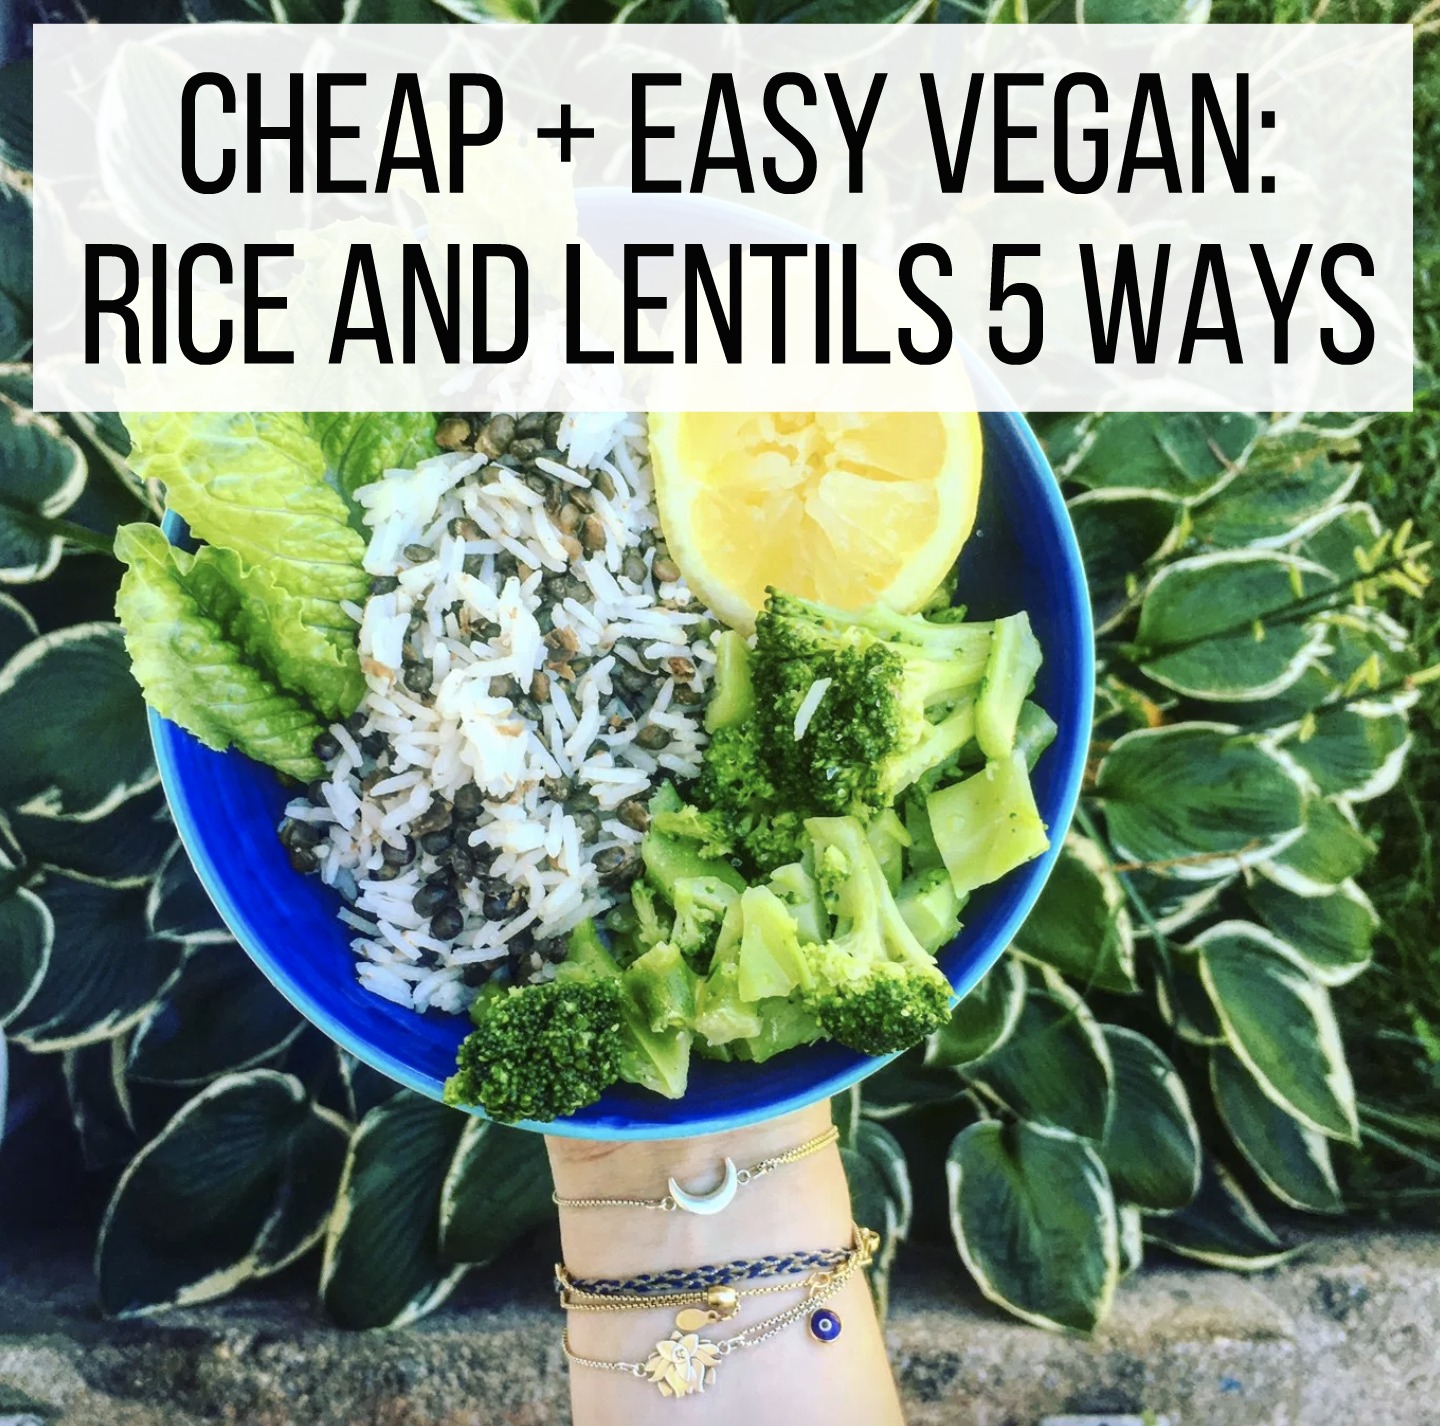 Cheap + Easy Vegan: Rice and Lentils 5 Ways